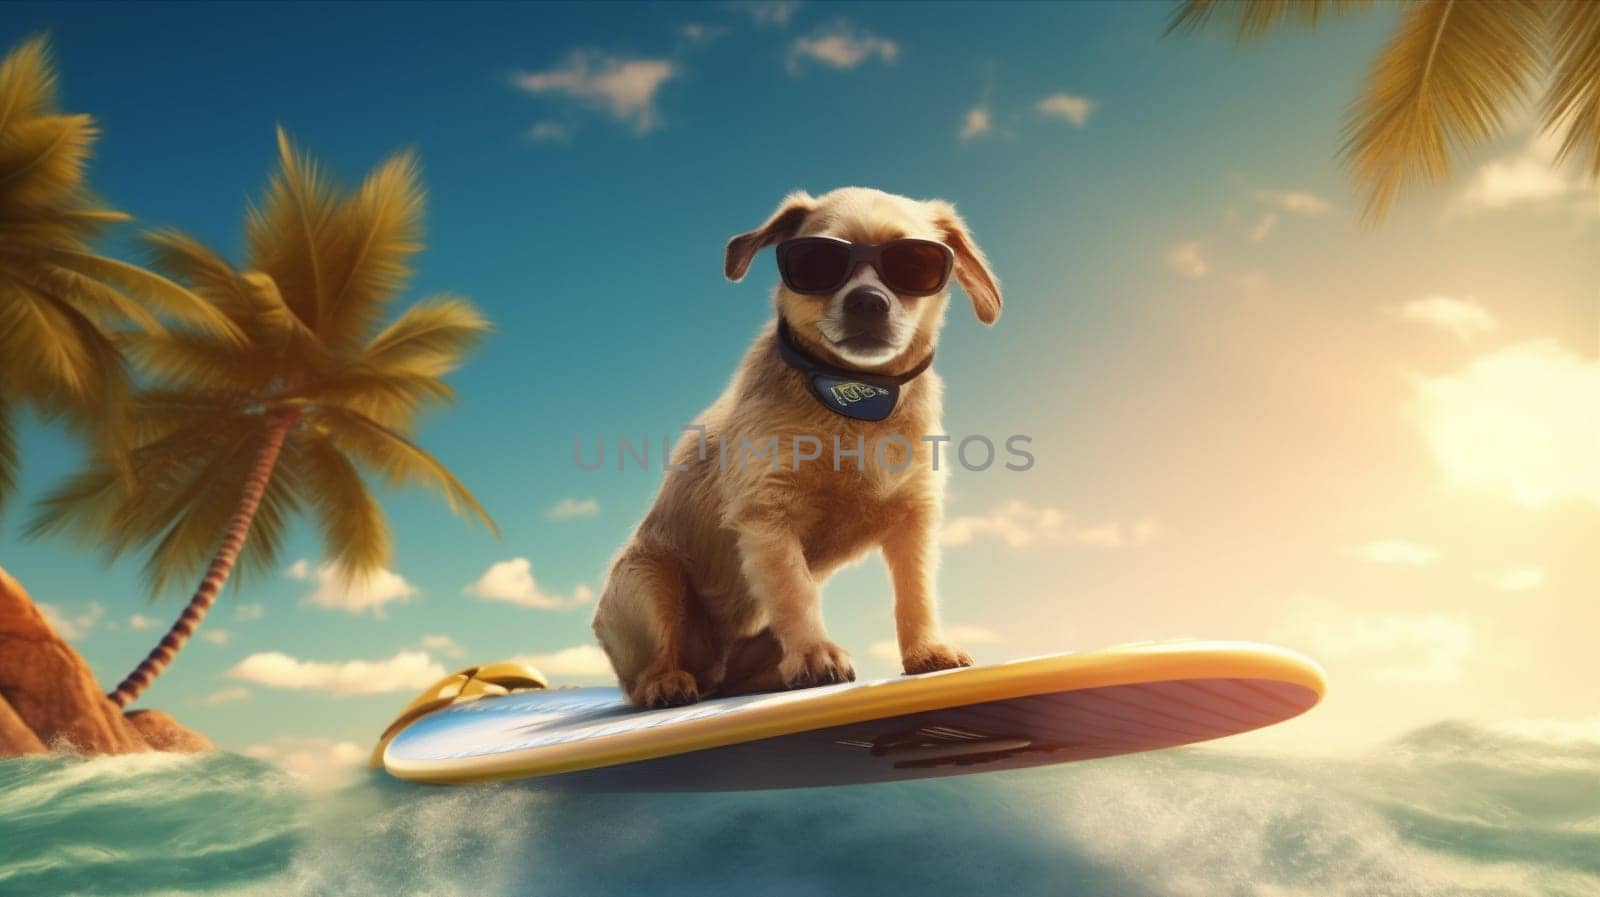 animal dog beach funny wave summer sport isolated shades fun surfer cute ai travel ocean vacation humor hawaiian puppy sun. Generative AI.